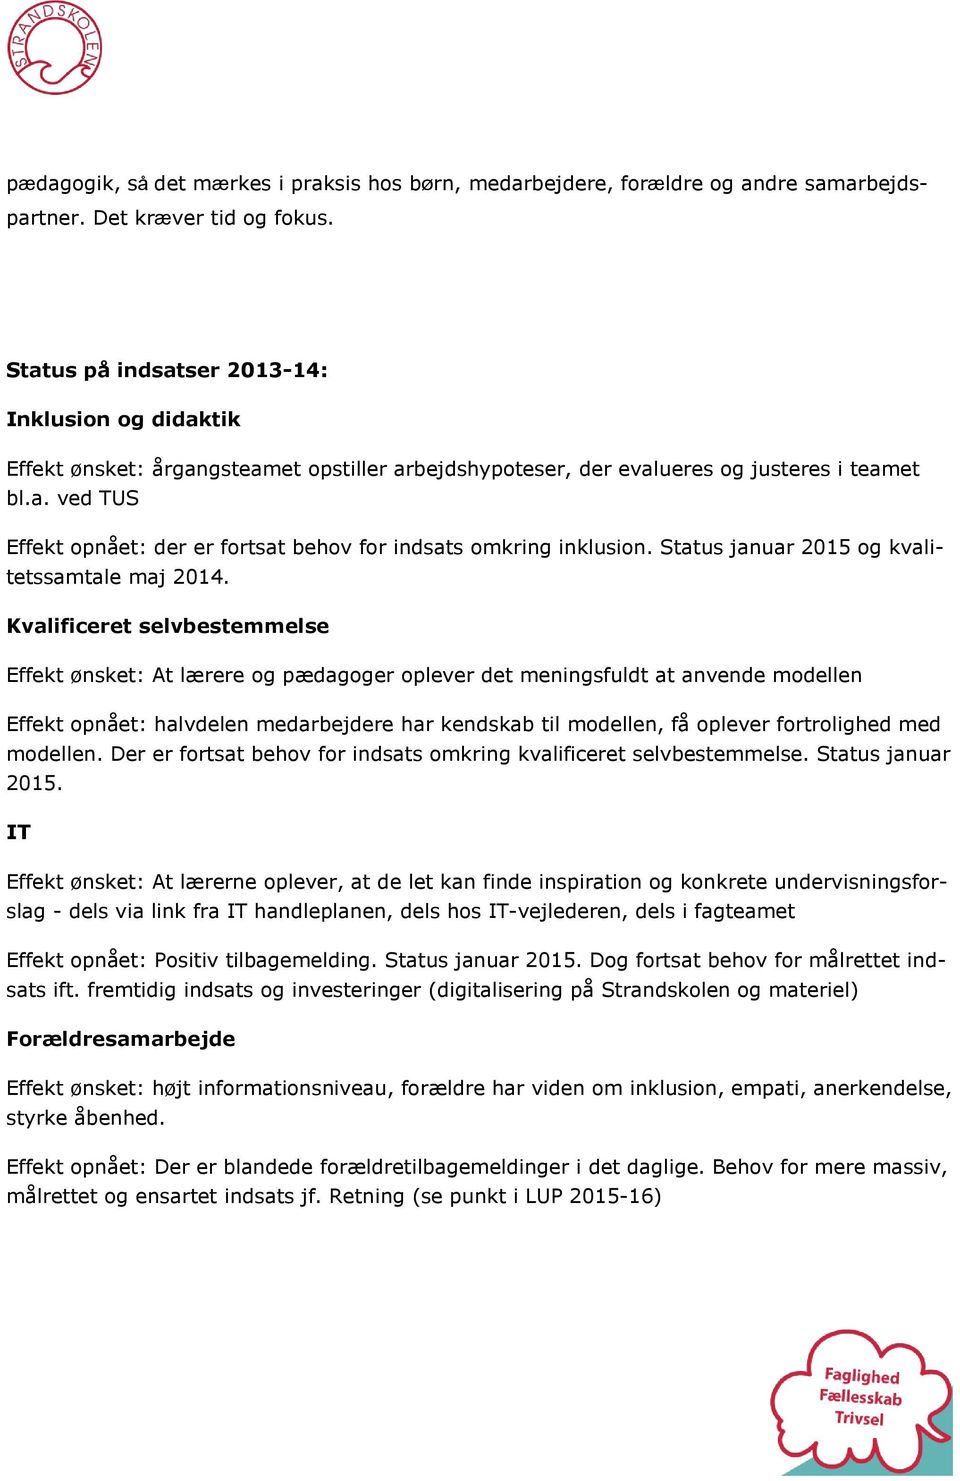 Status januar 2015 og kvalitetssamtale maj 2014.